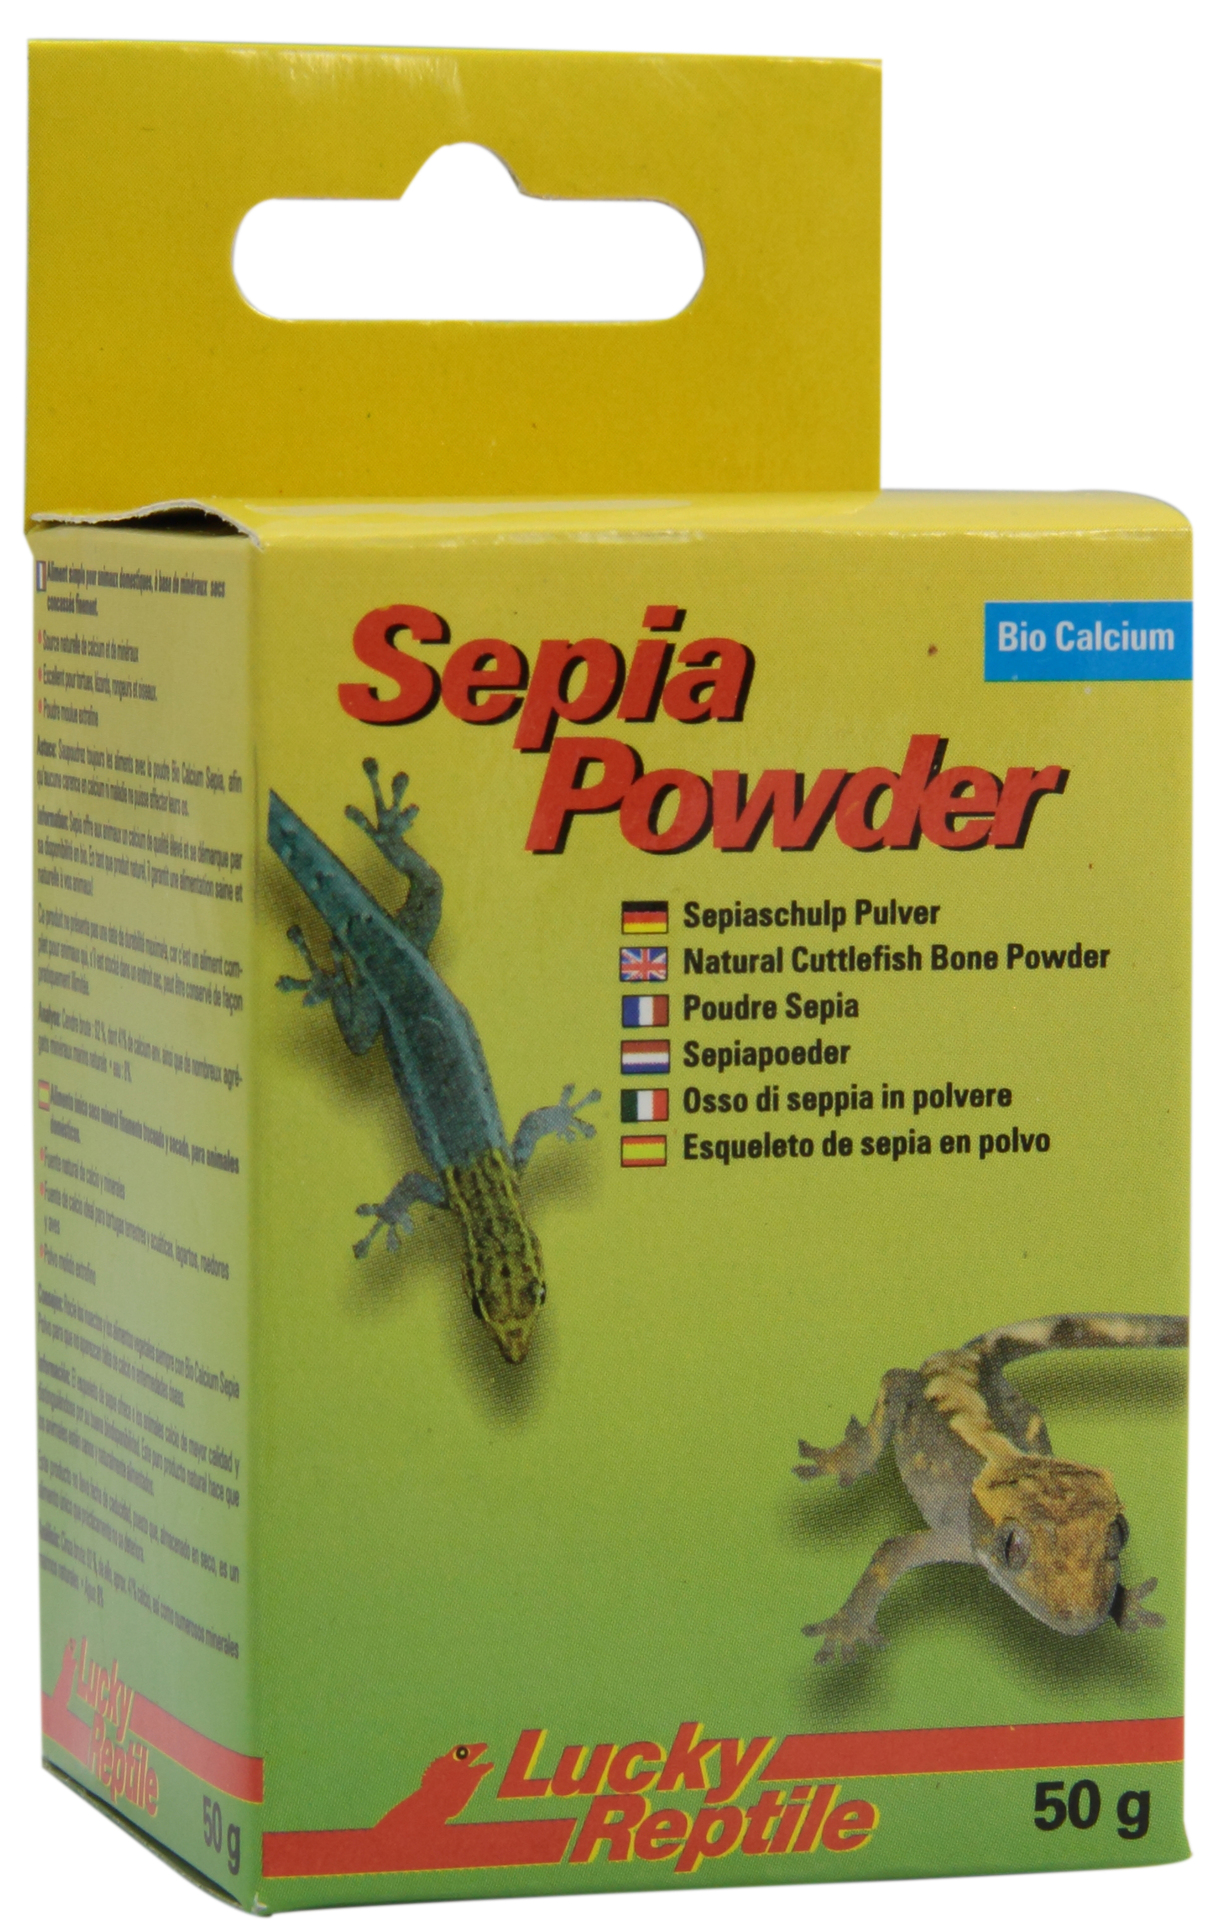 Import-Export Peter Hoch GmbH Sepia Powder 50 g